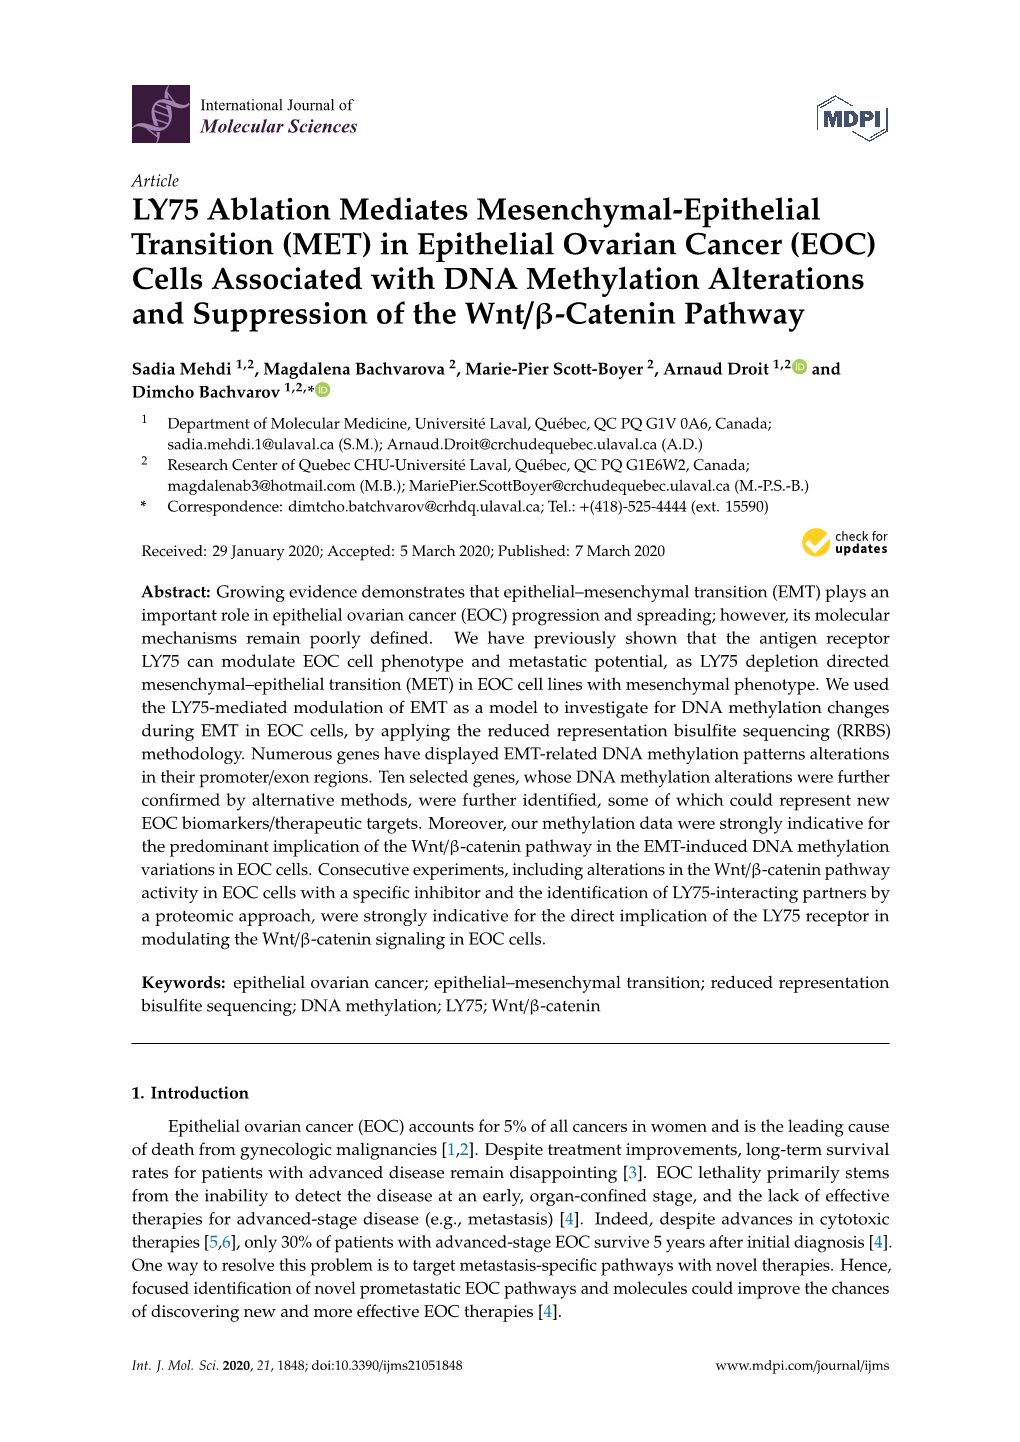 LY75 Ablation Mediates Mesenchymal-Epithelial Transition (MET)